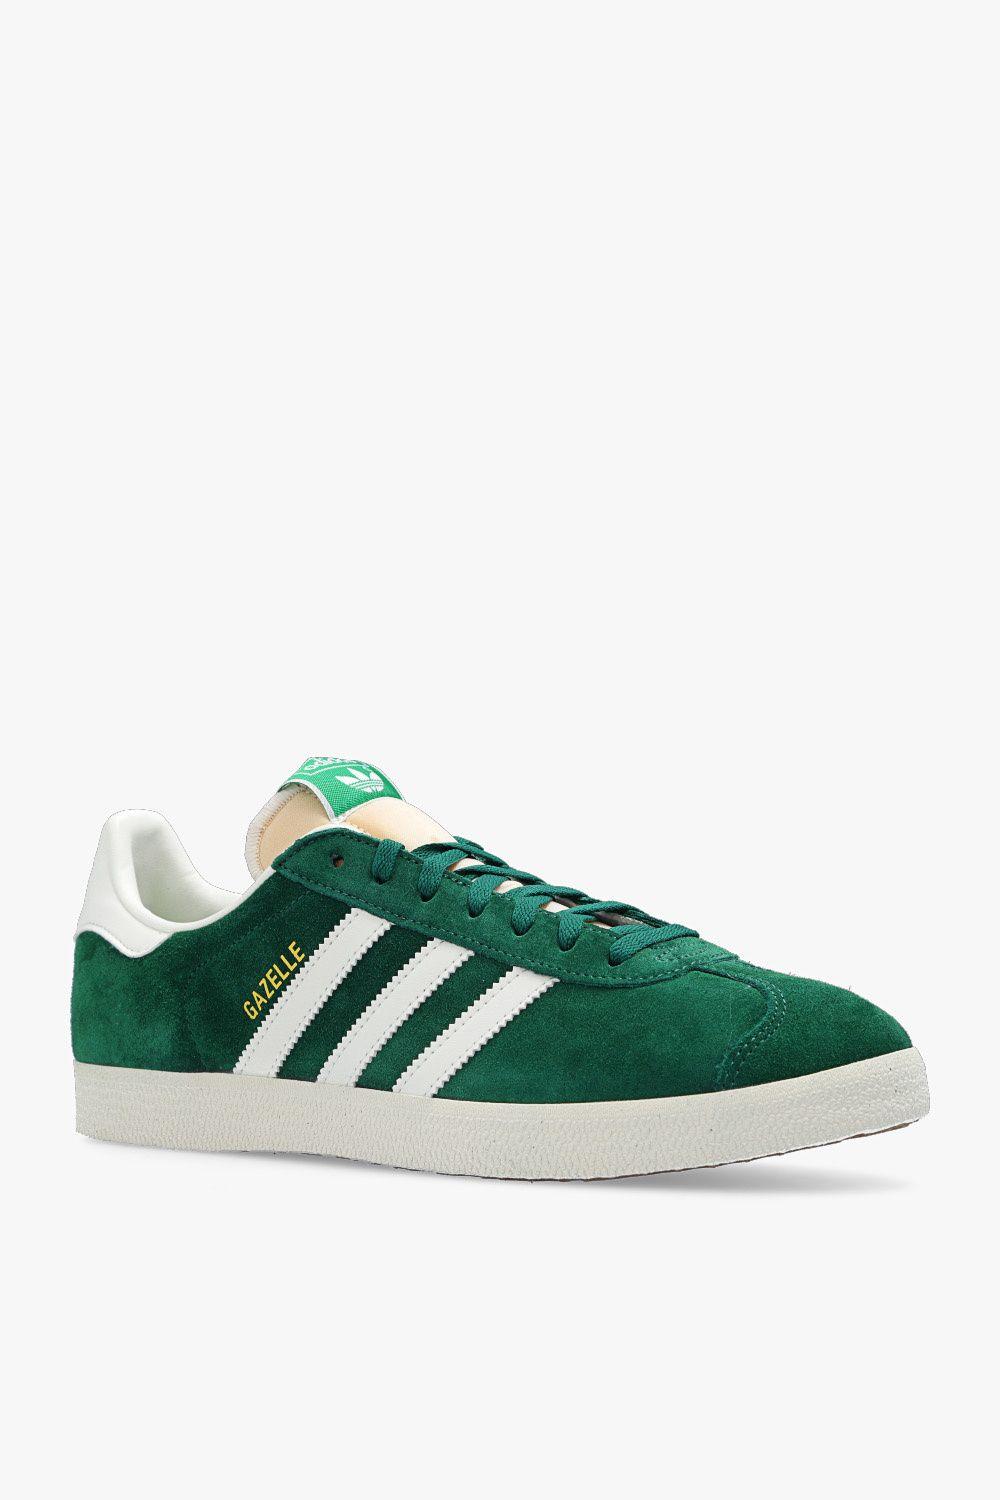 adidas Originals 'gazelle' Sneakers in Green for Men | Lyst